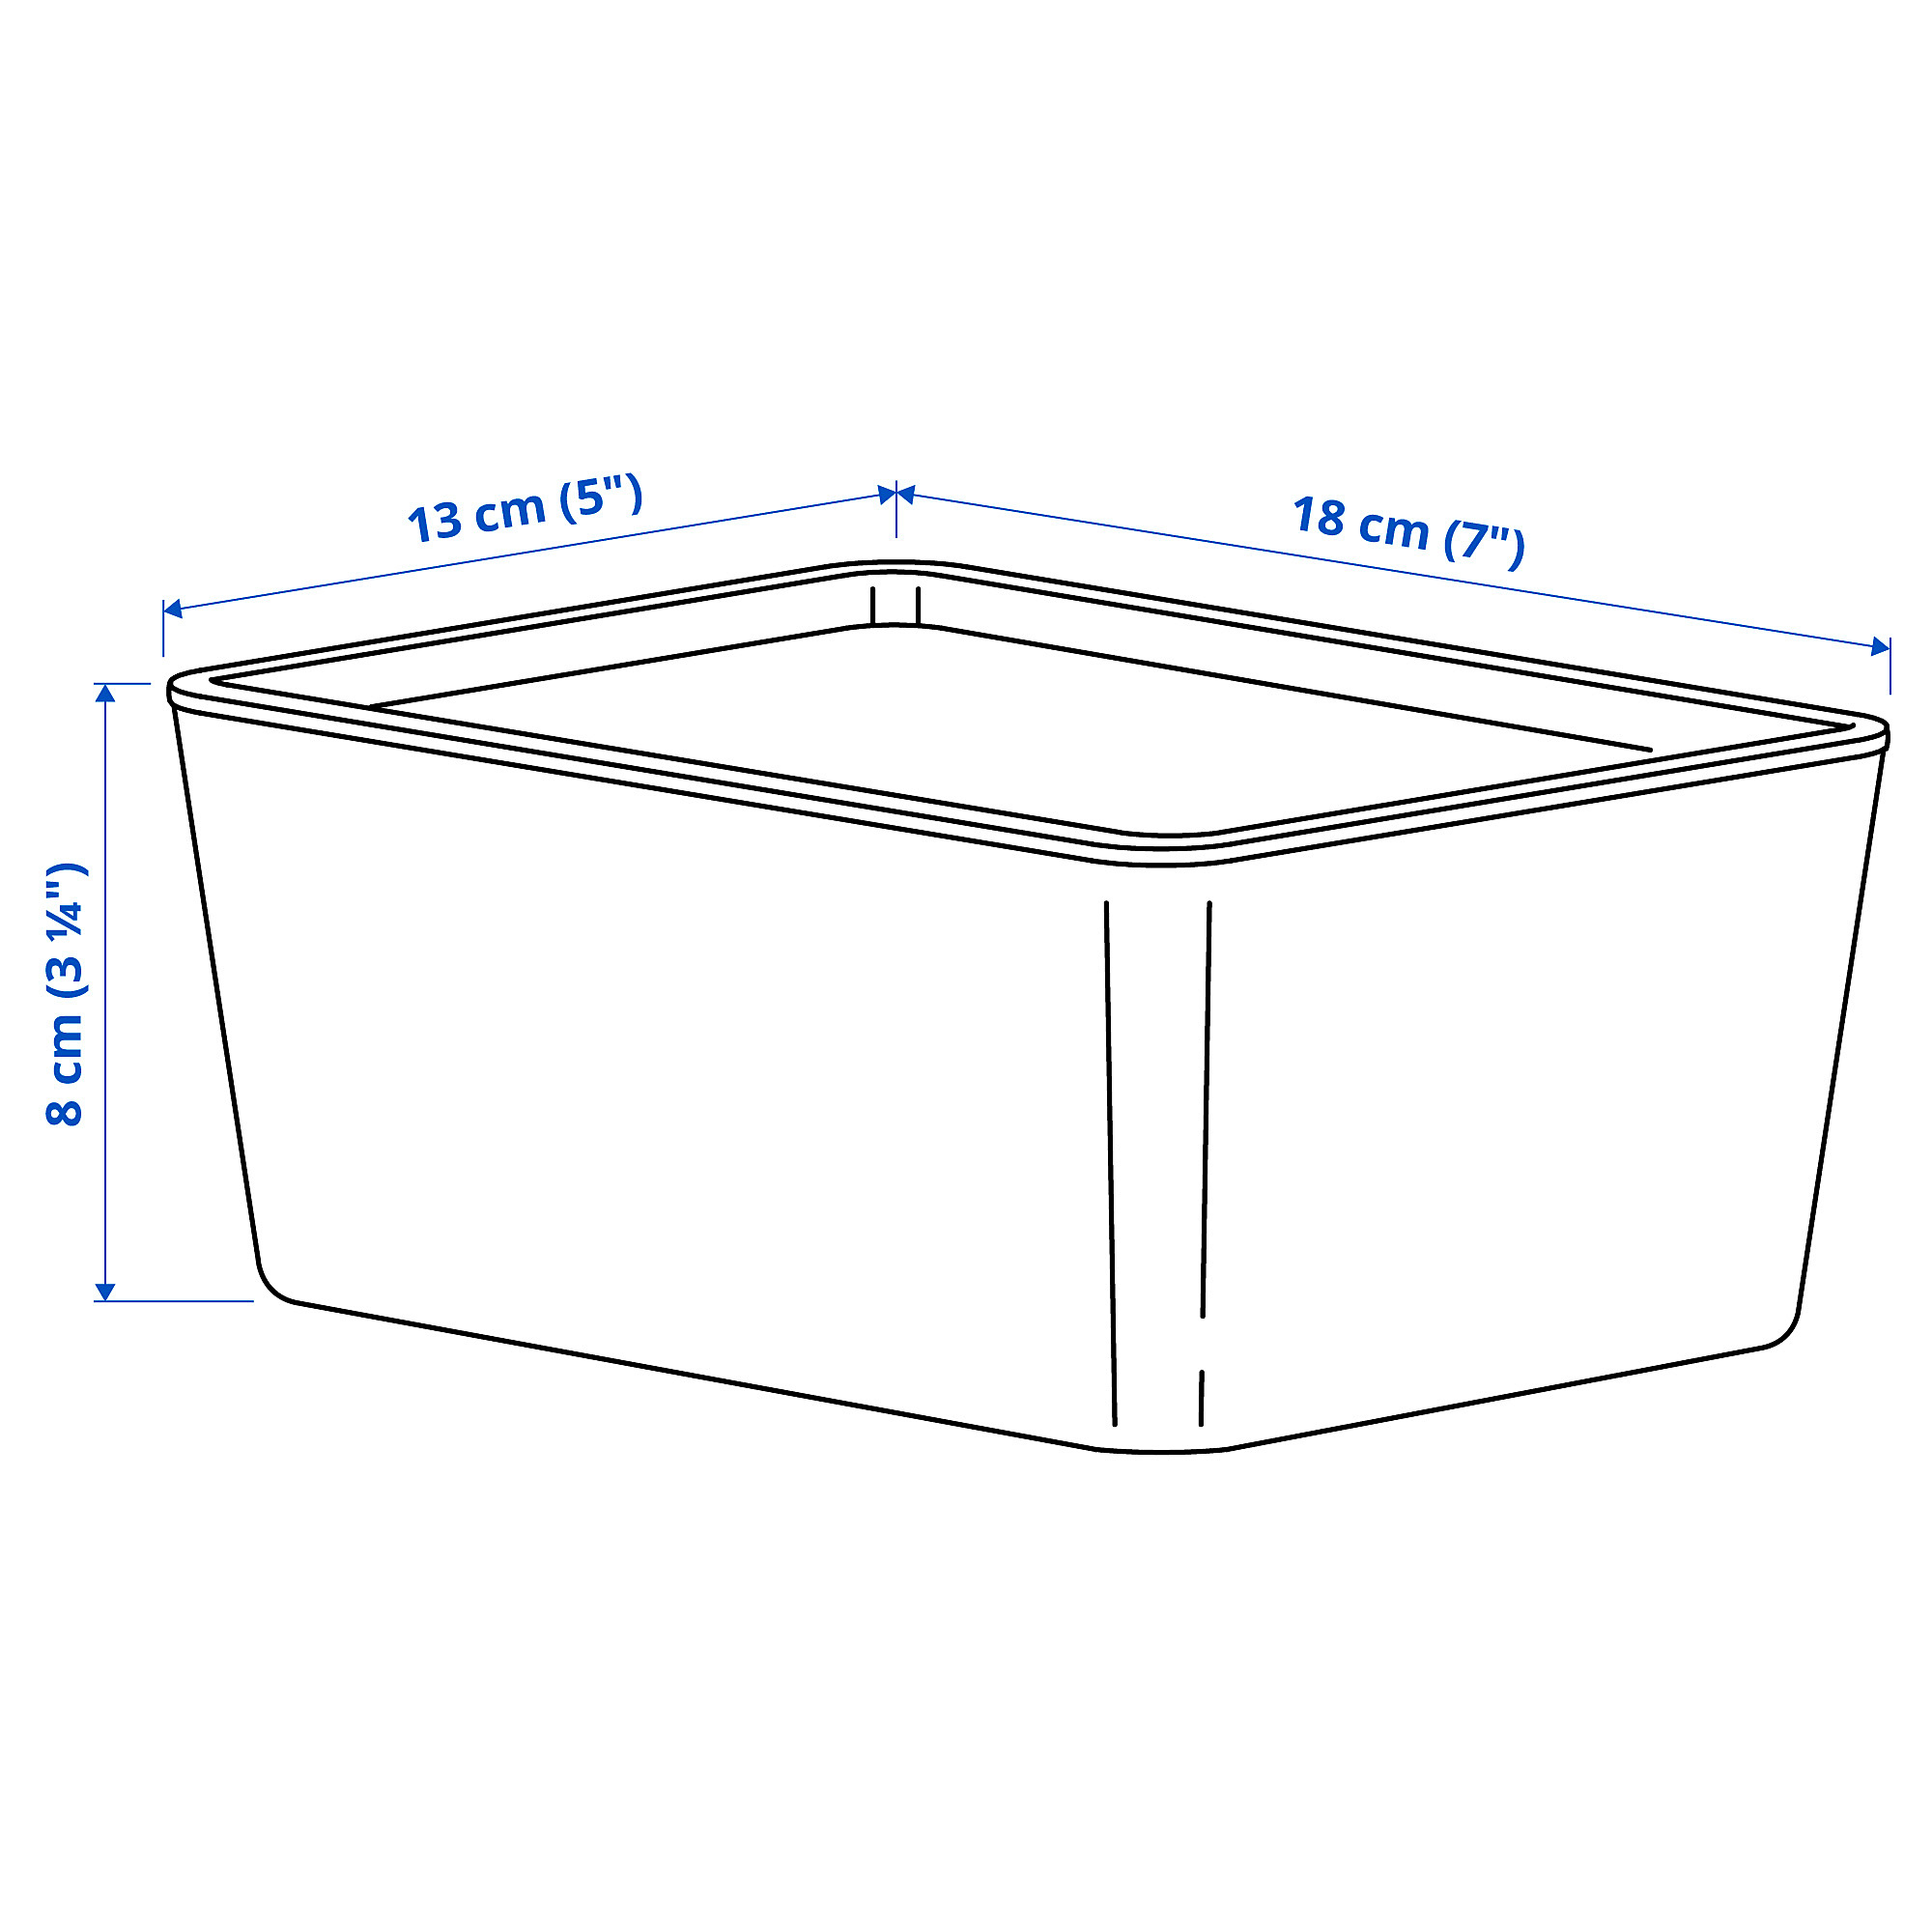 KUGGIS box with lid